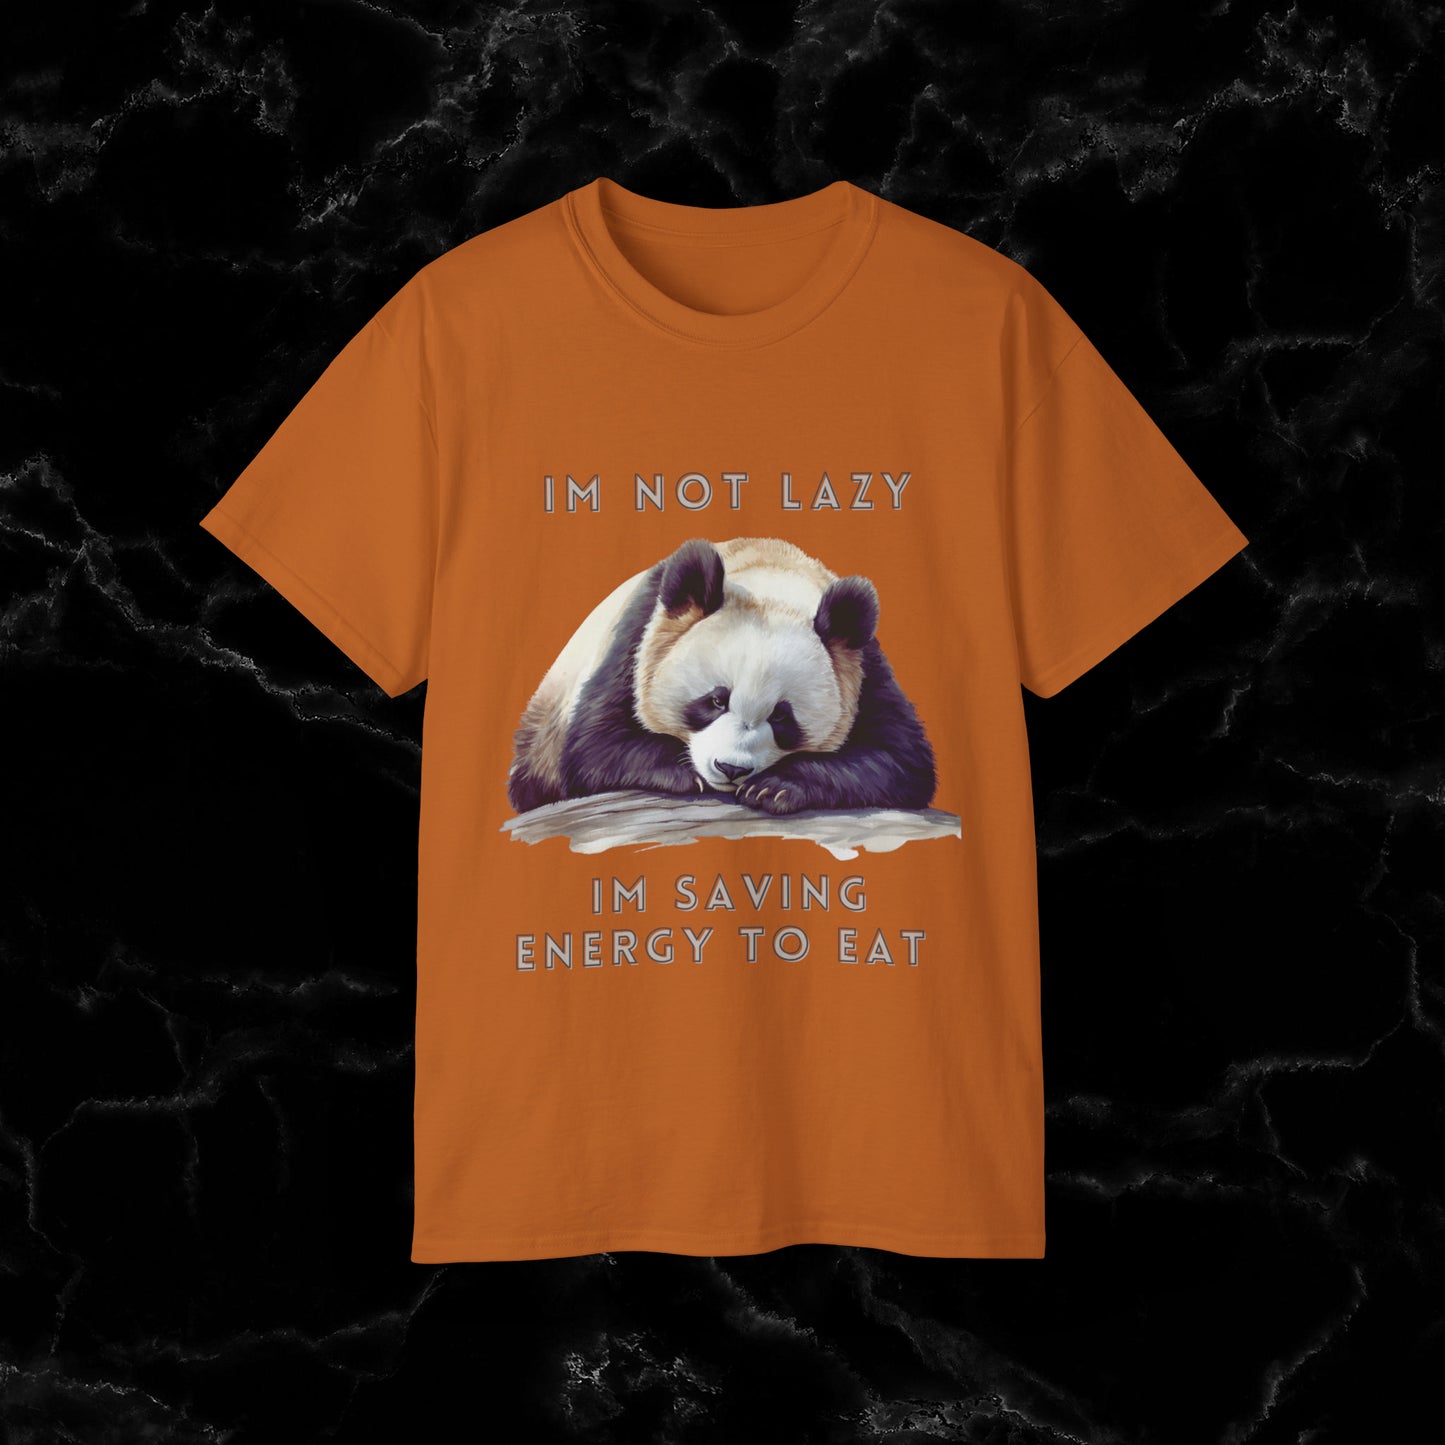 Nap Time Panda Unisex Funny Tee - Hilarious Panda Nap Design - I'm Not Lazy, I'm Saving Energy to Eat T-Shirt Texas Orange M 